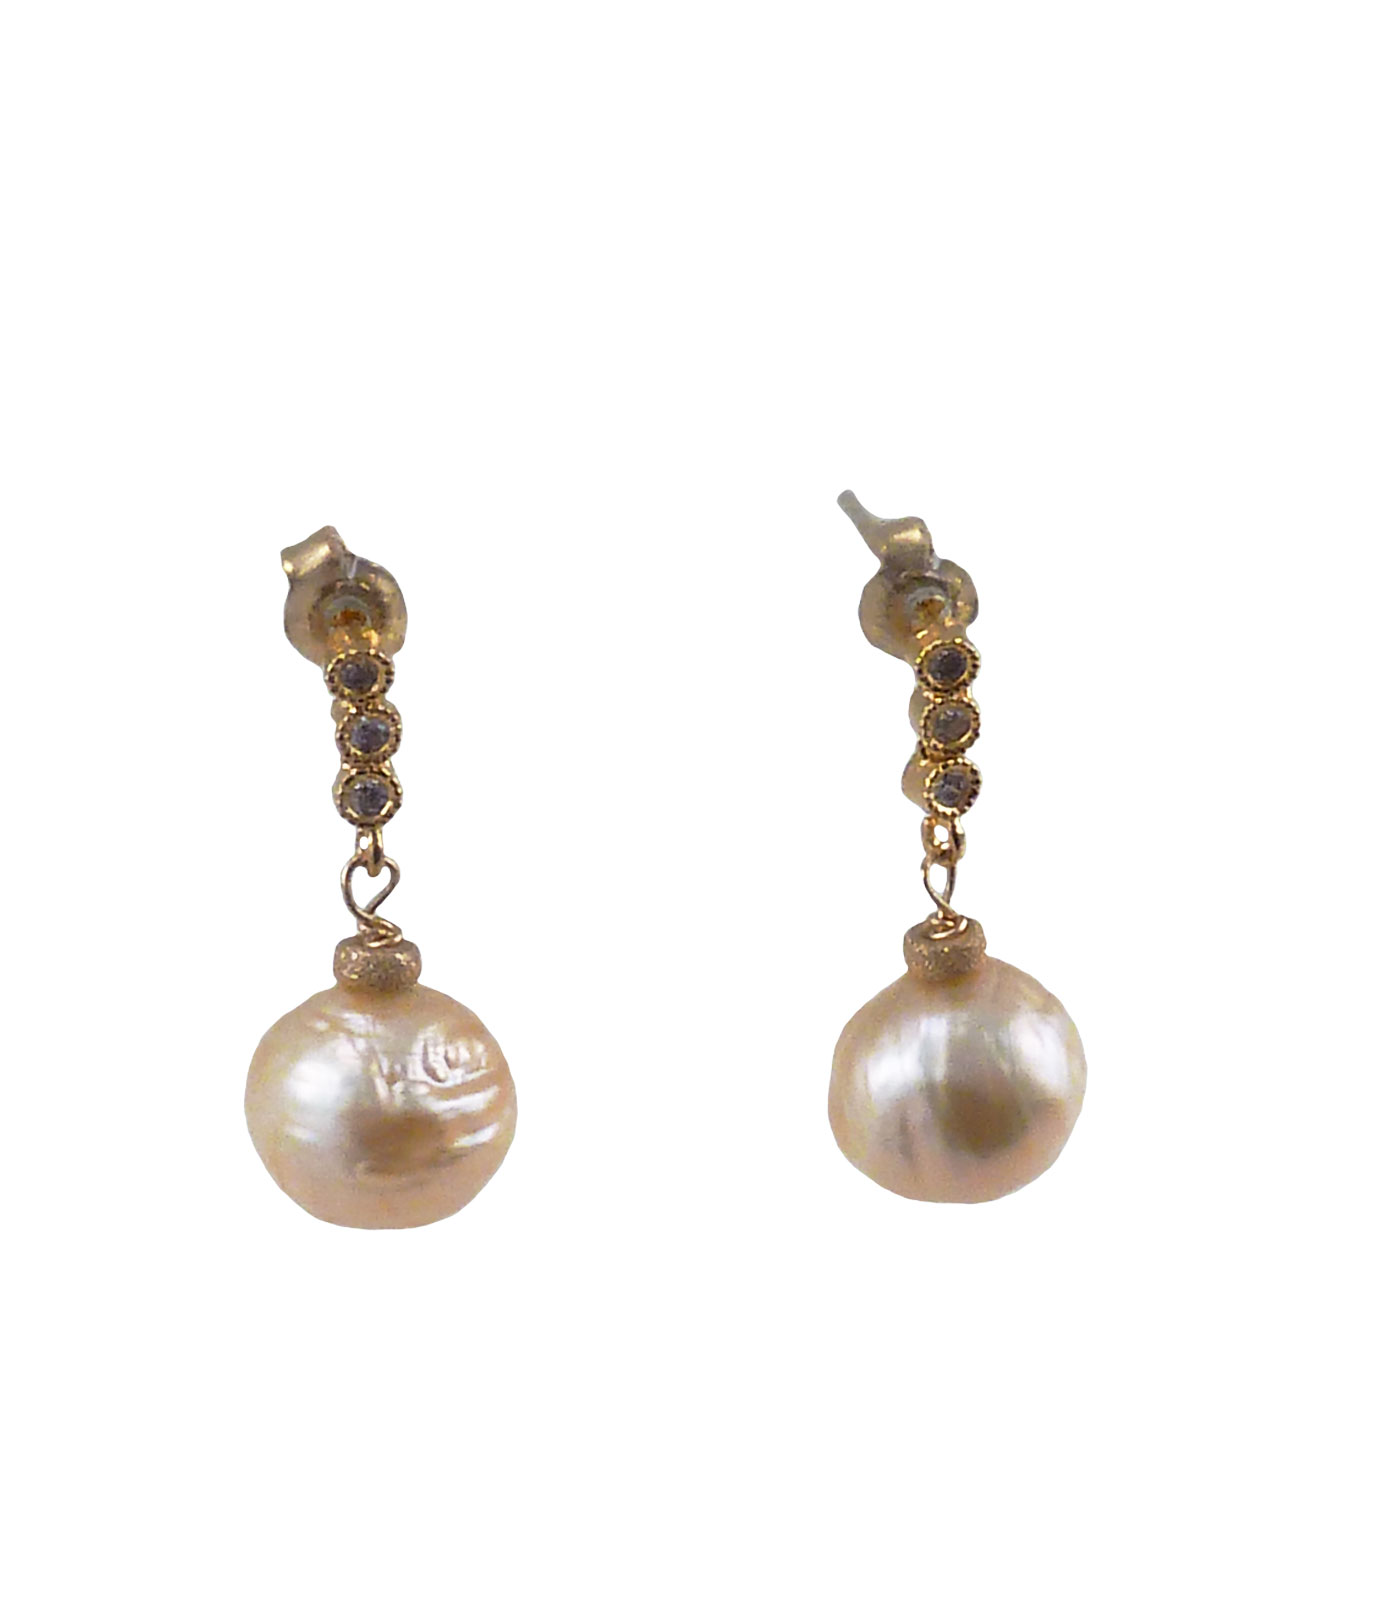 Pearl earrings apricot Chinese-Kasumi pearls. Modern pearl jewelry